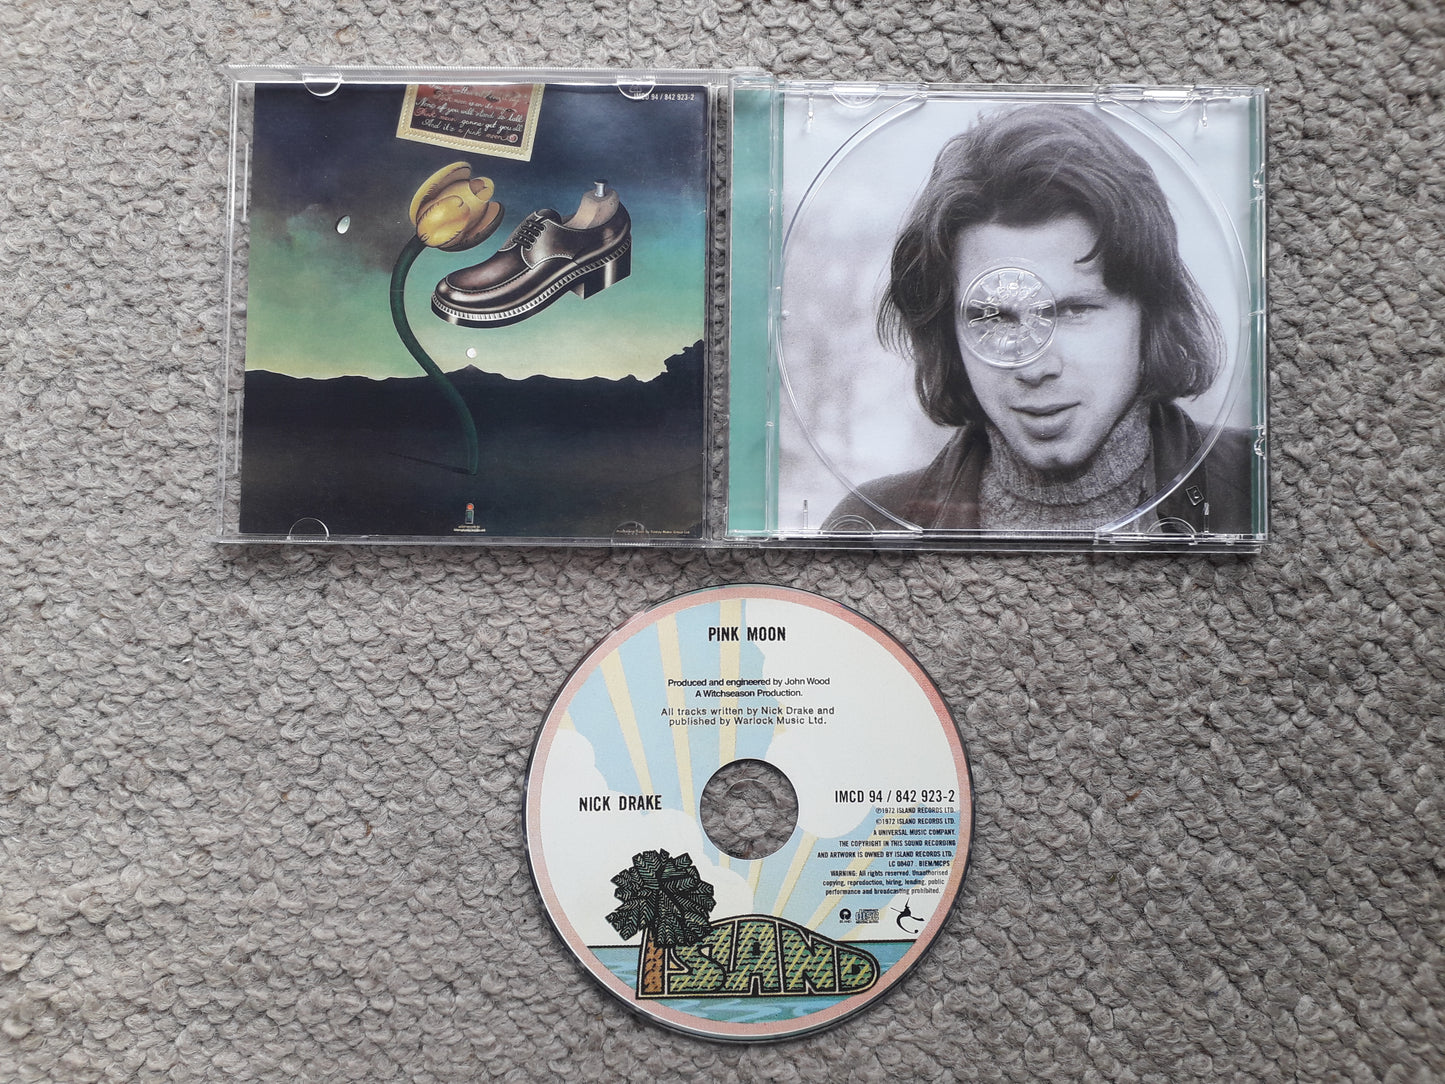 Nick Drake-Pink Moon CD (IMCD 94/842 923-2)